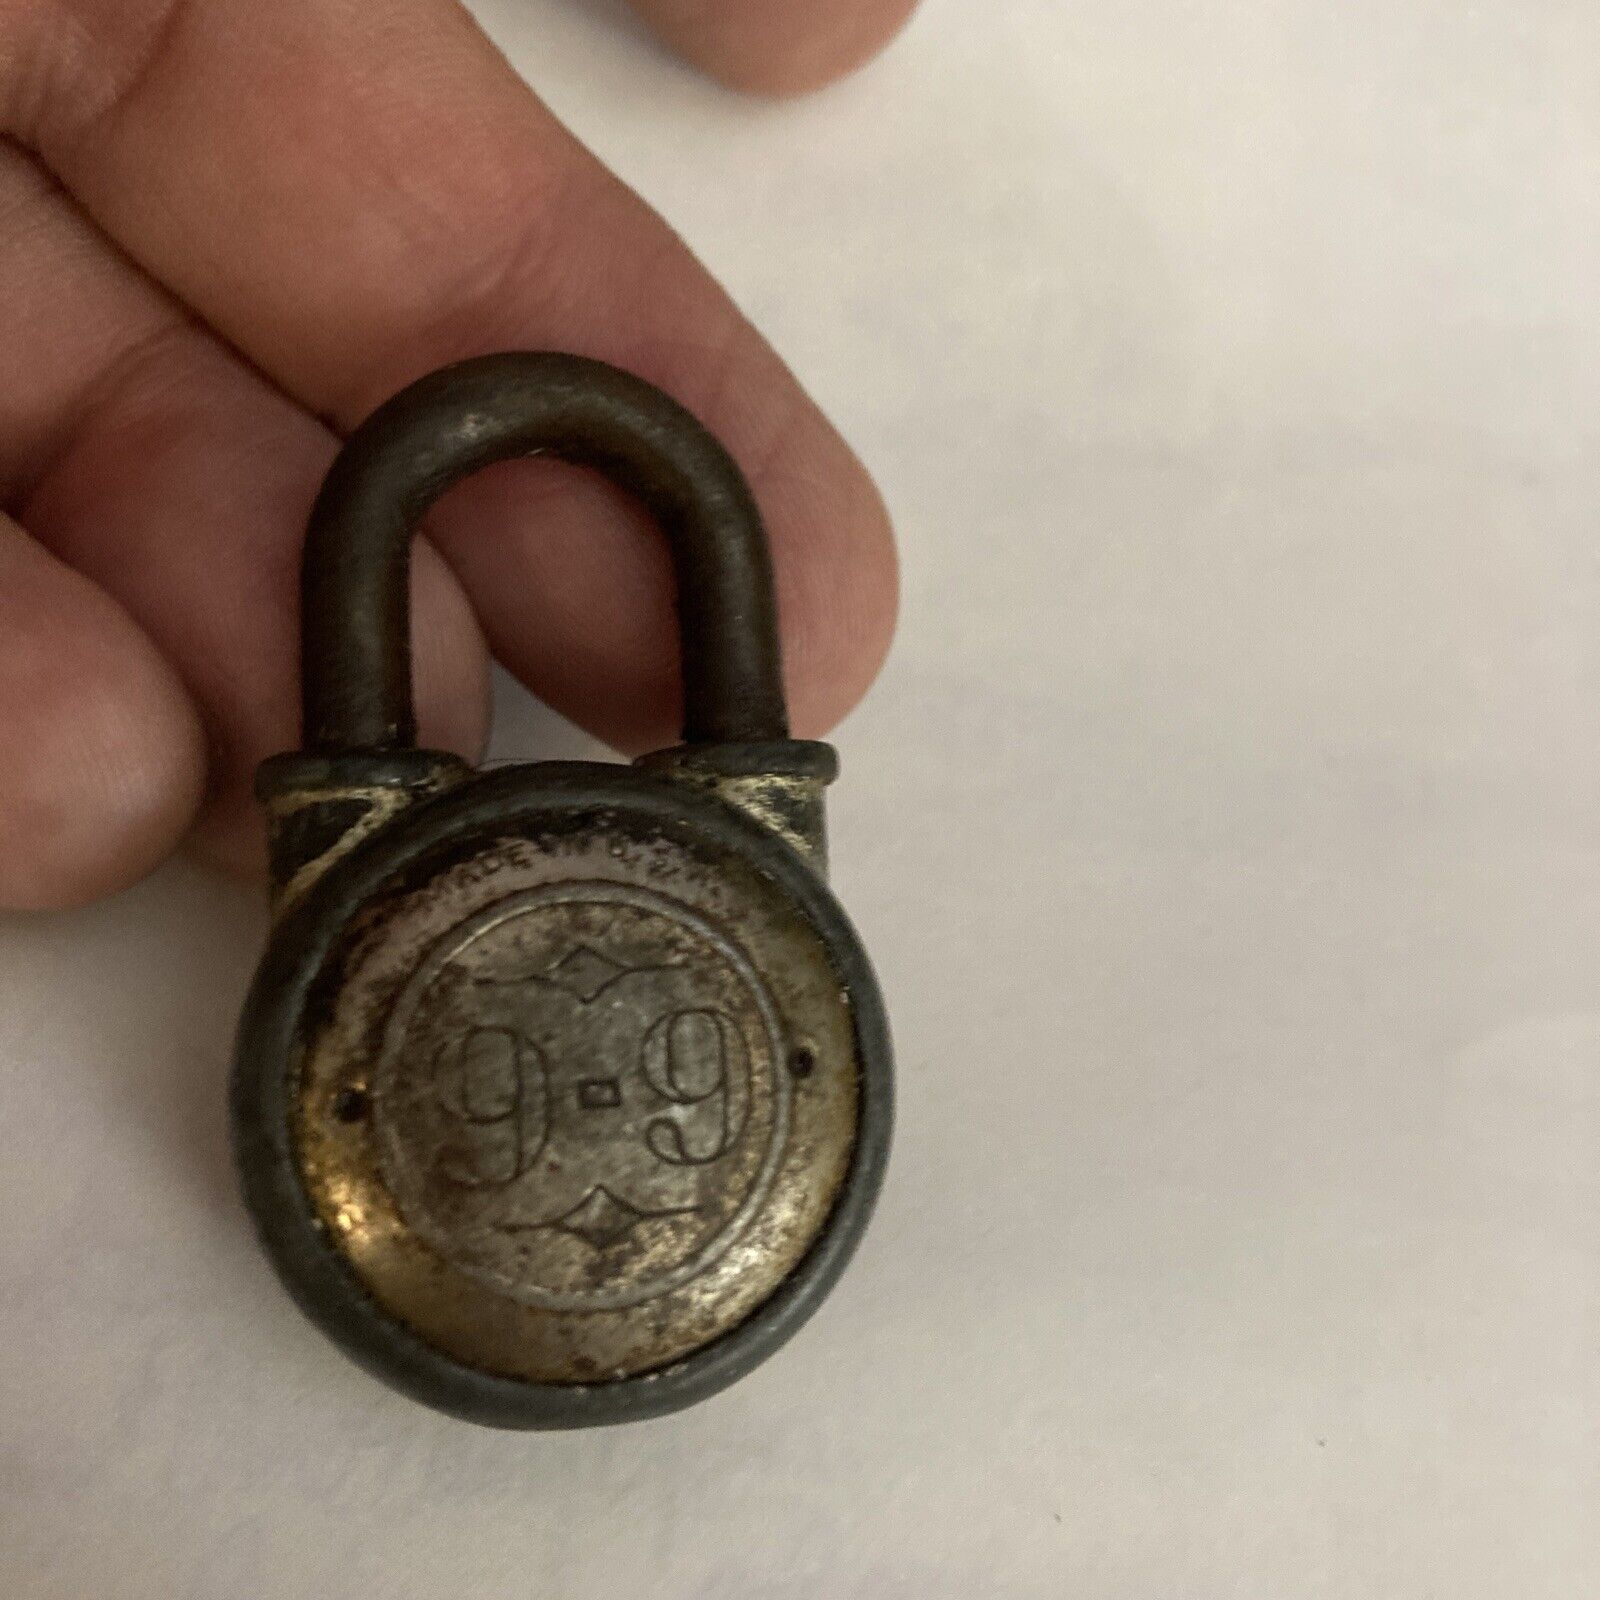 Walsco Lock 9-9 Small Vintage No Key